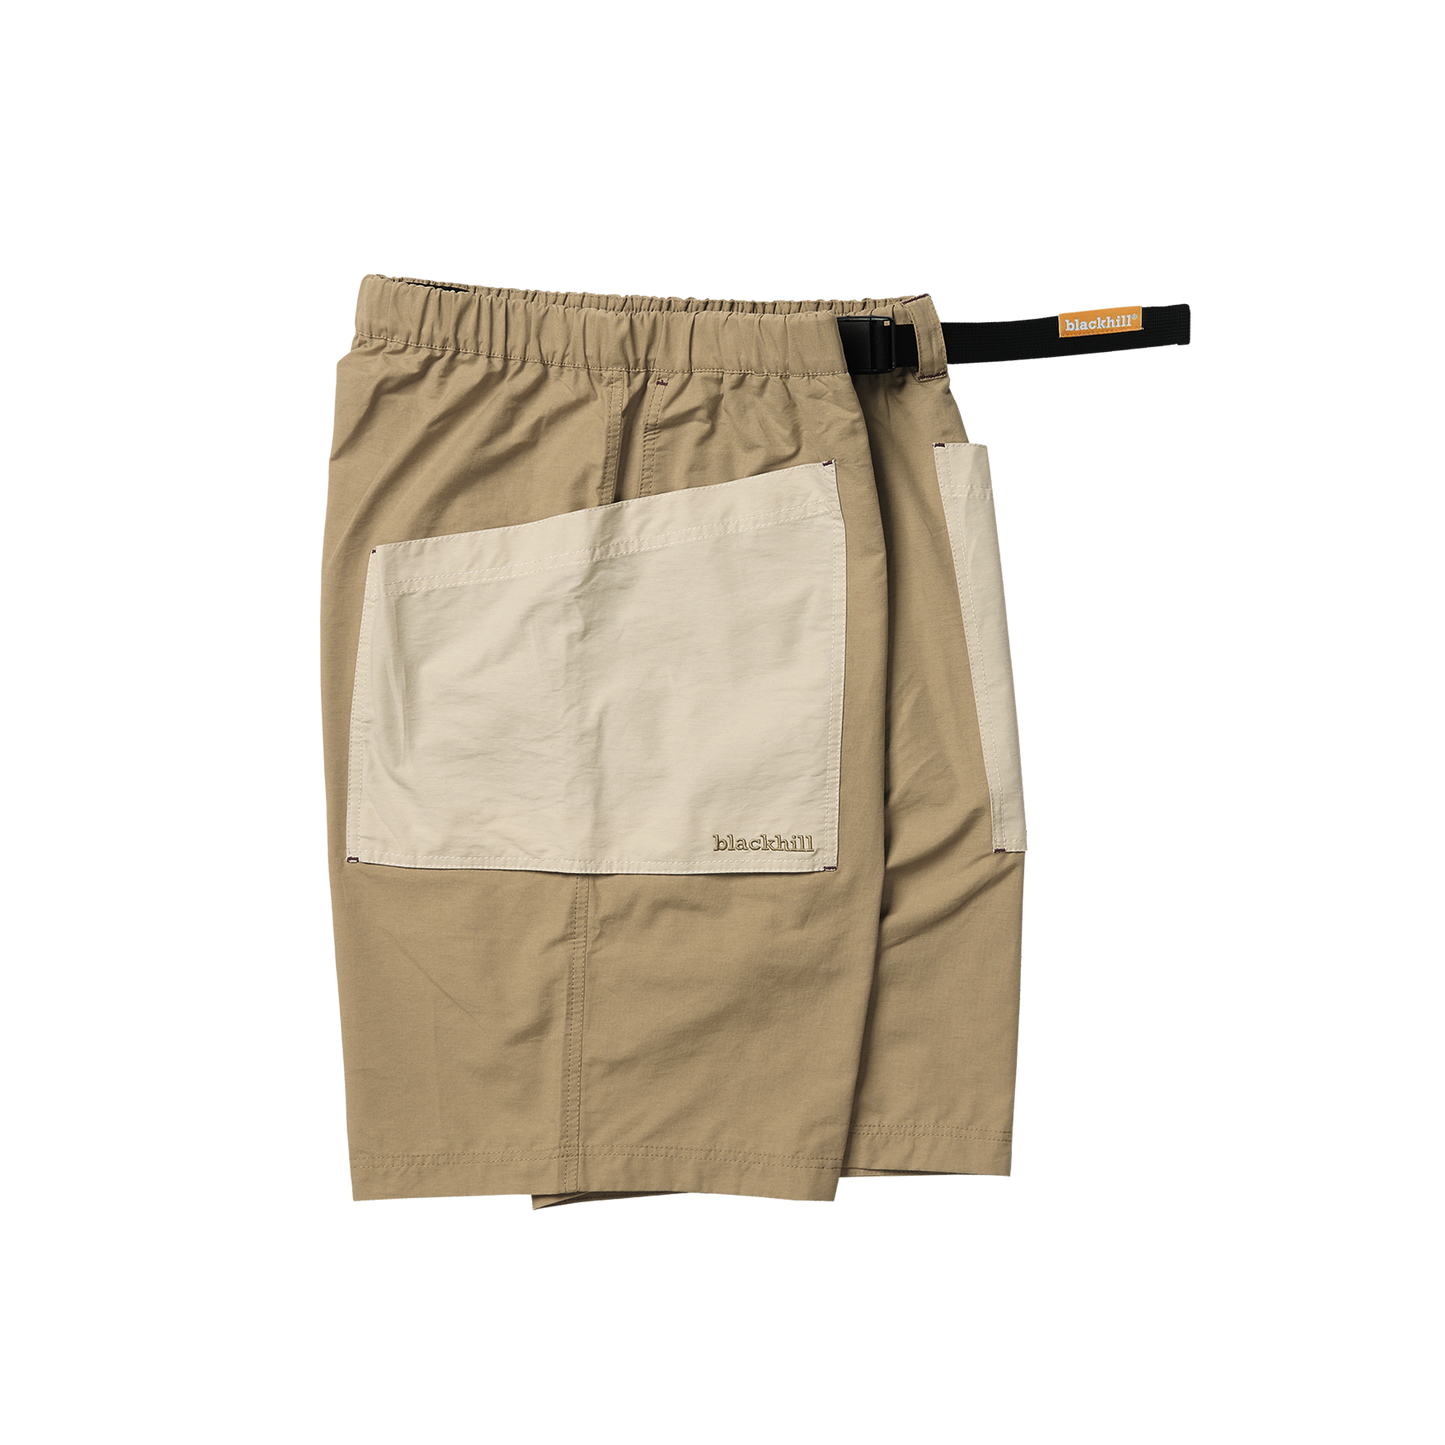 Blackhill Lifestyle Big Pockets Shorts (Khaki)